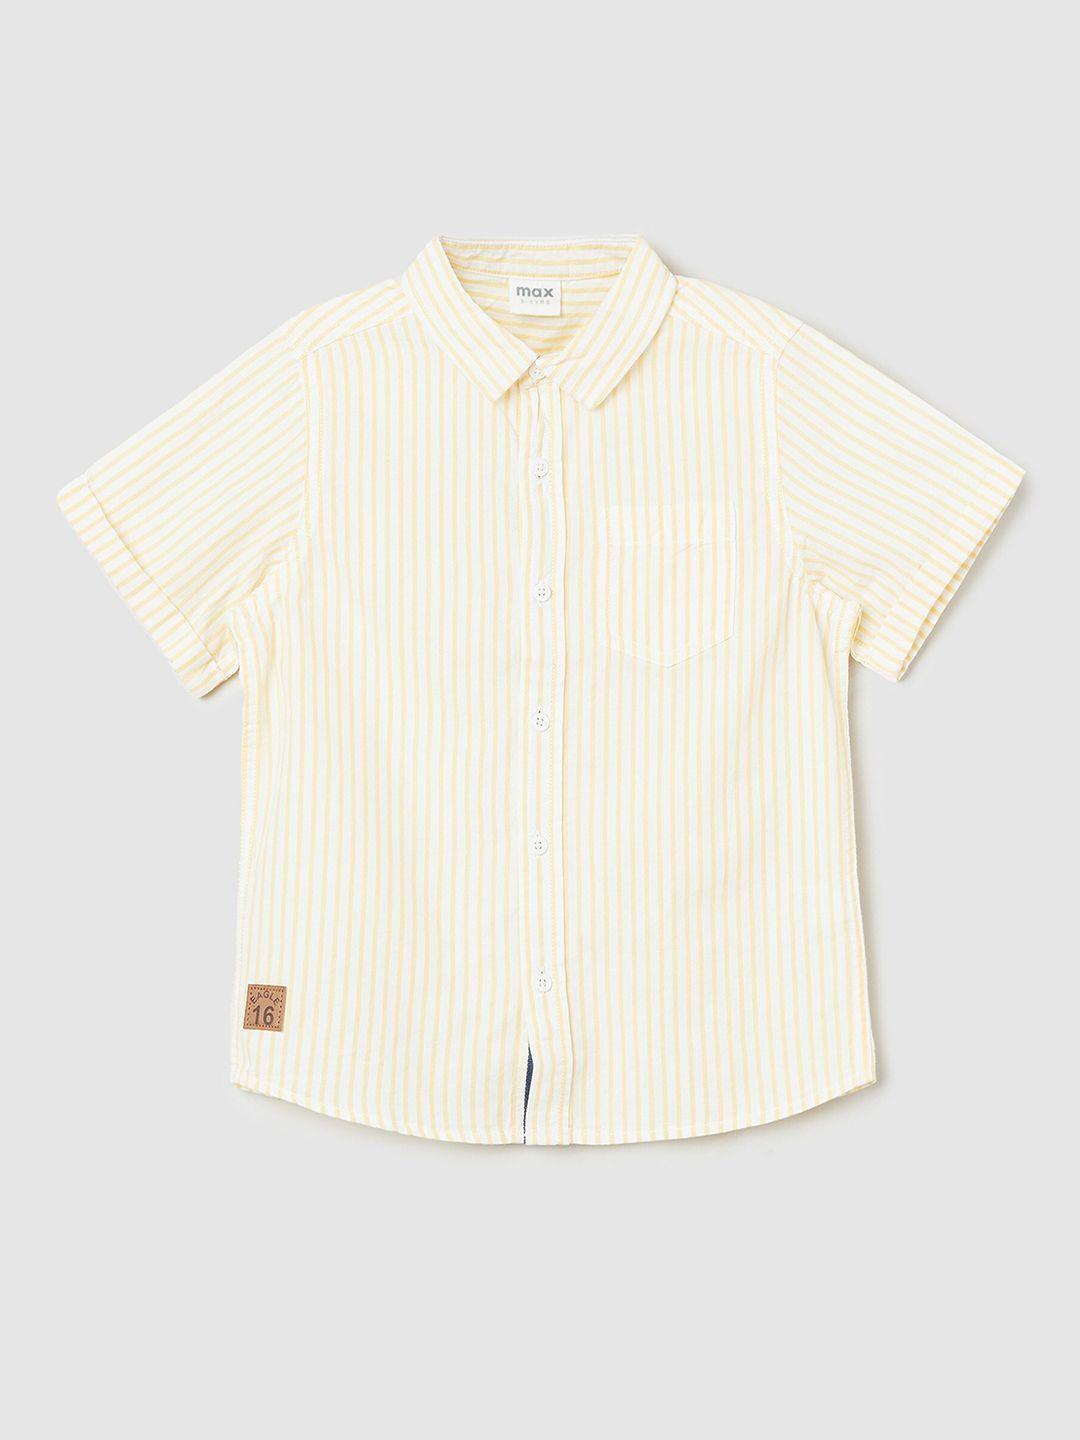 max-boys-striped-pure-cotton-casual-shirt